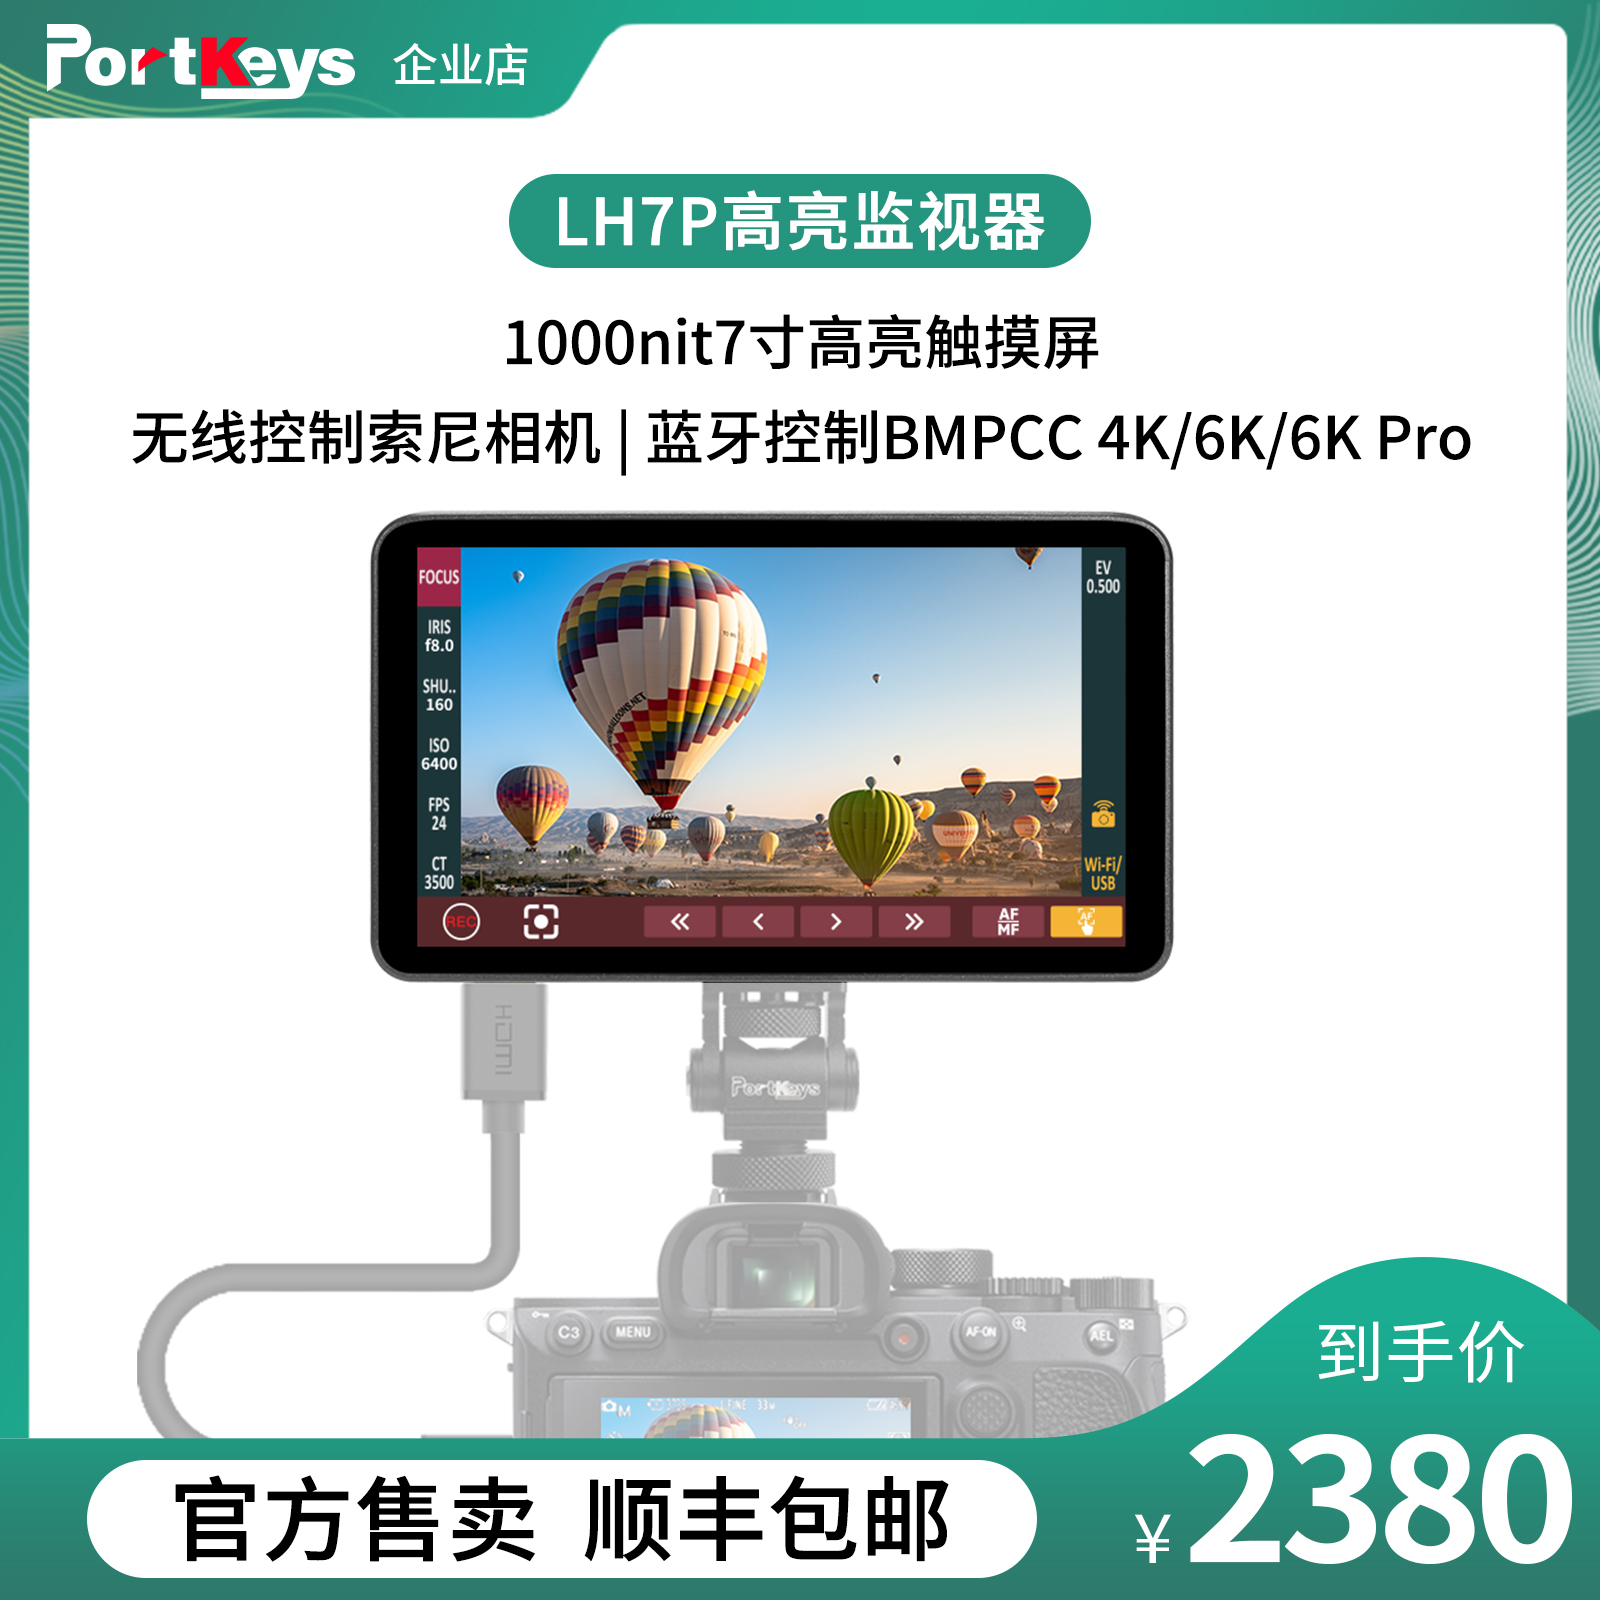 Portkeys Aiken LH7P 1000nit 7 inch wireless control camera 7 inch bright monitor-Taobao